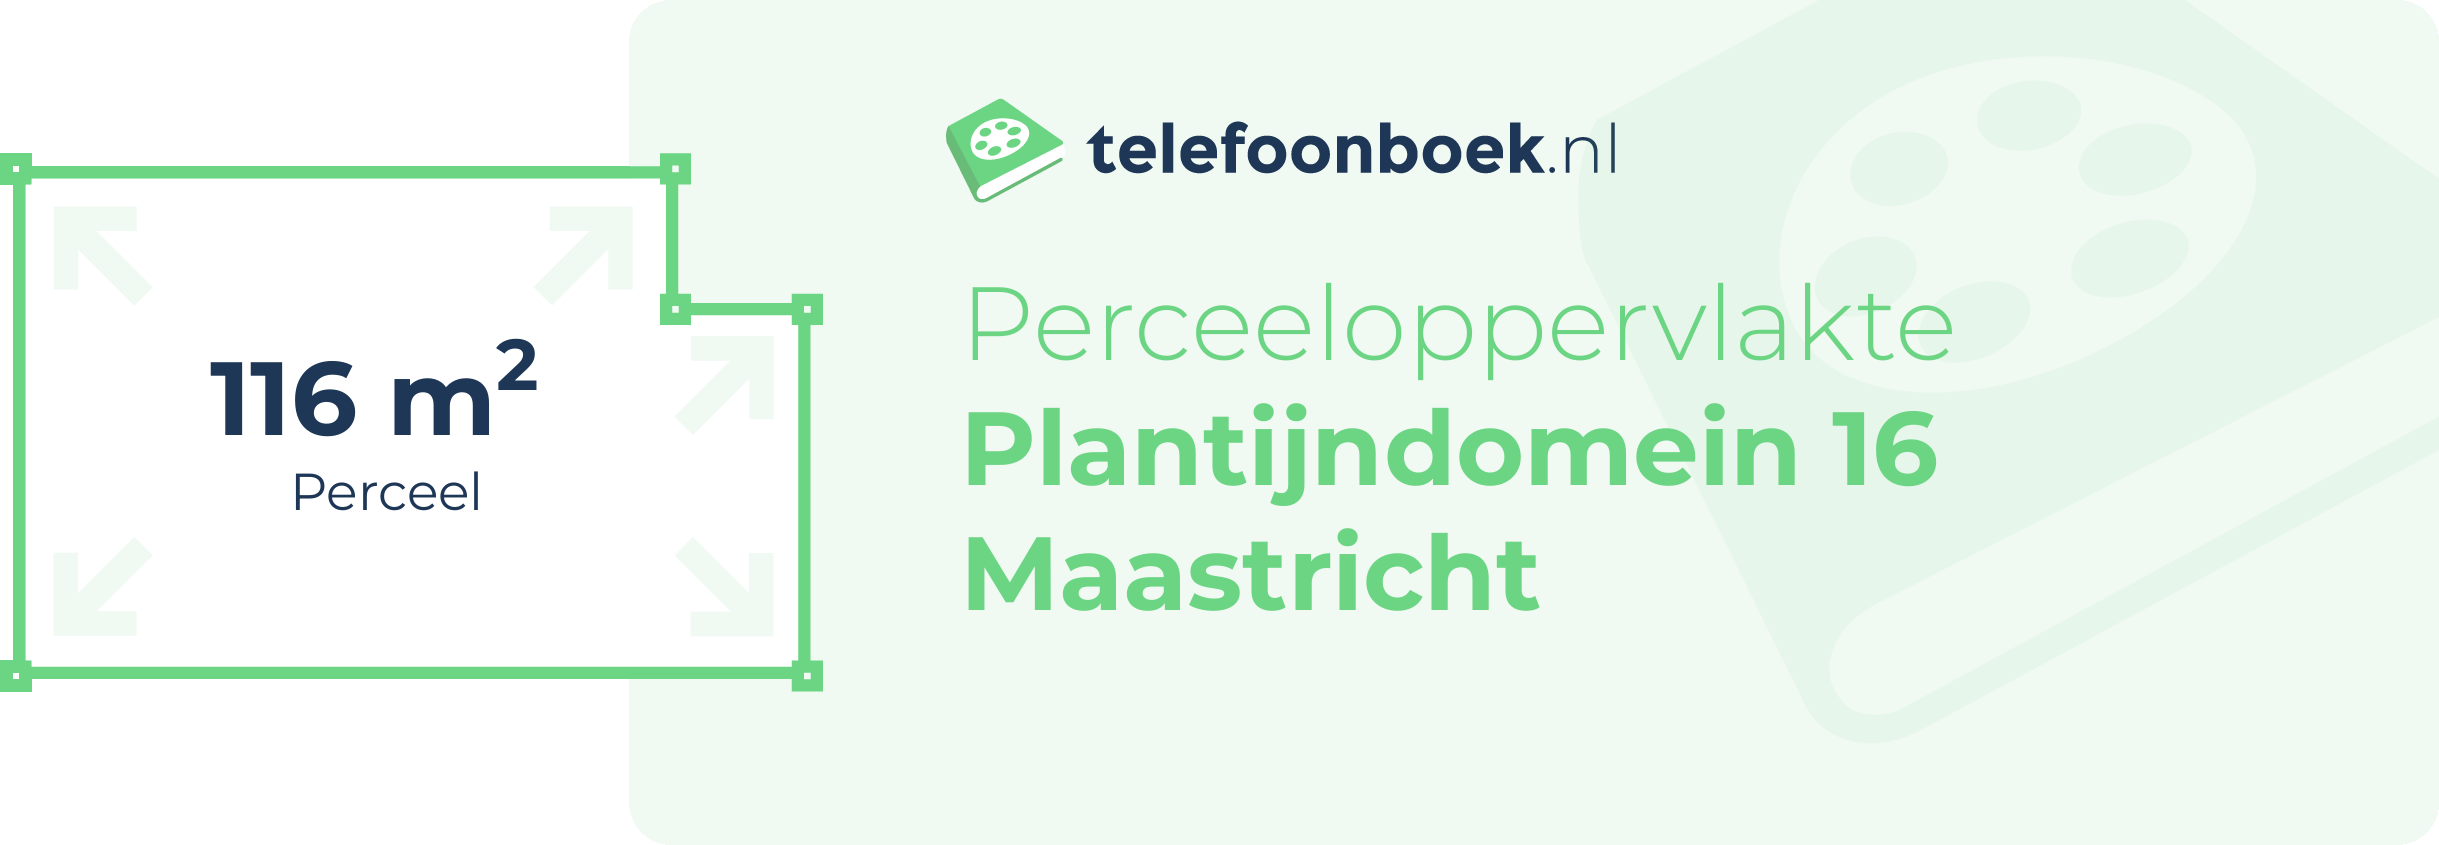 Perceeloppervlakte Plantijndomein 16 Maastricht